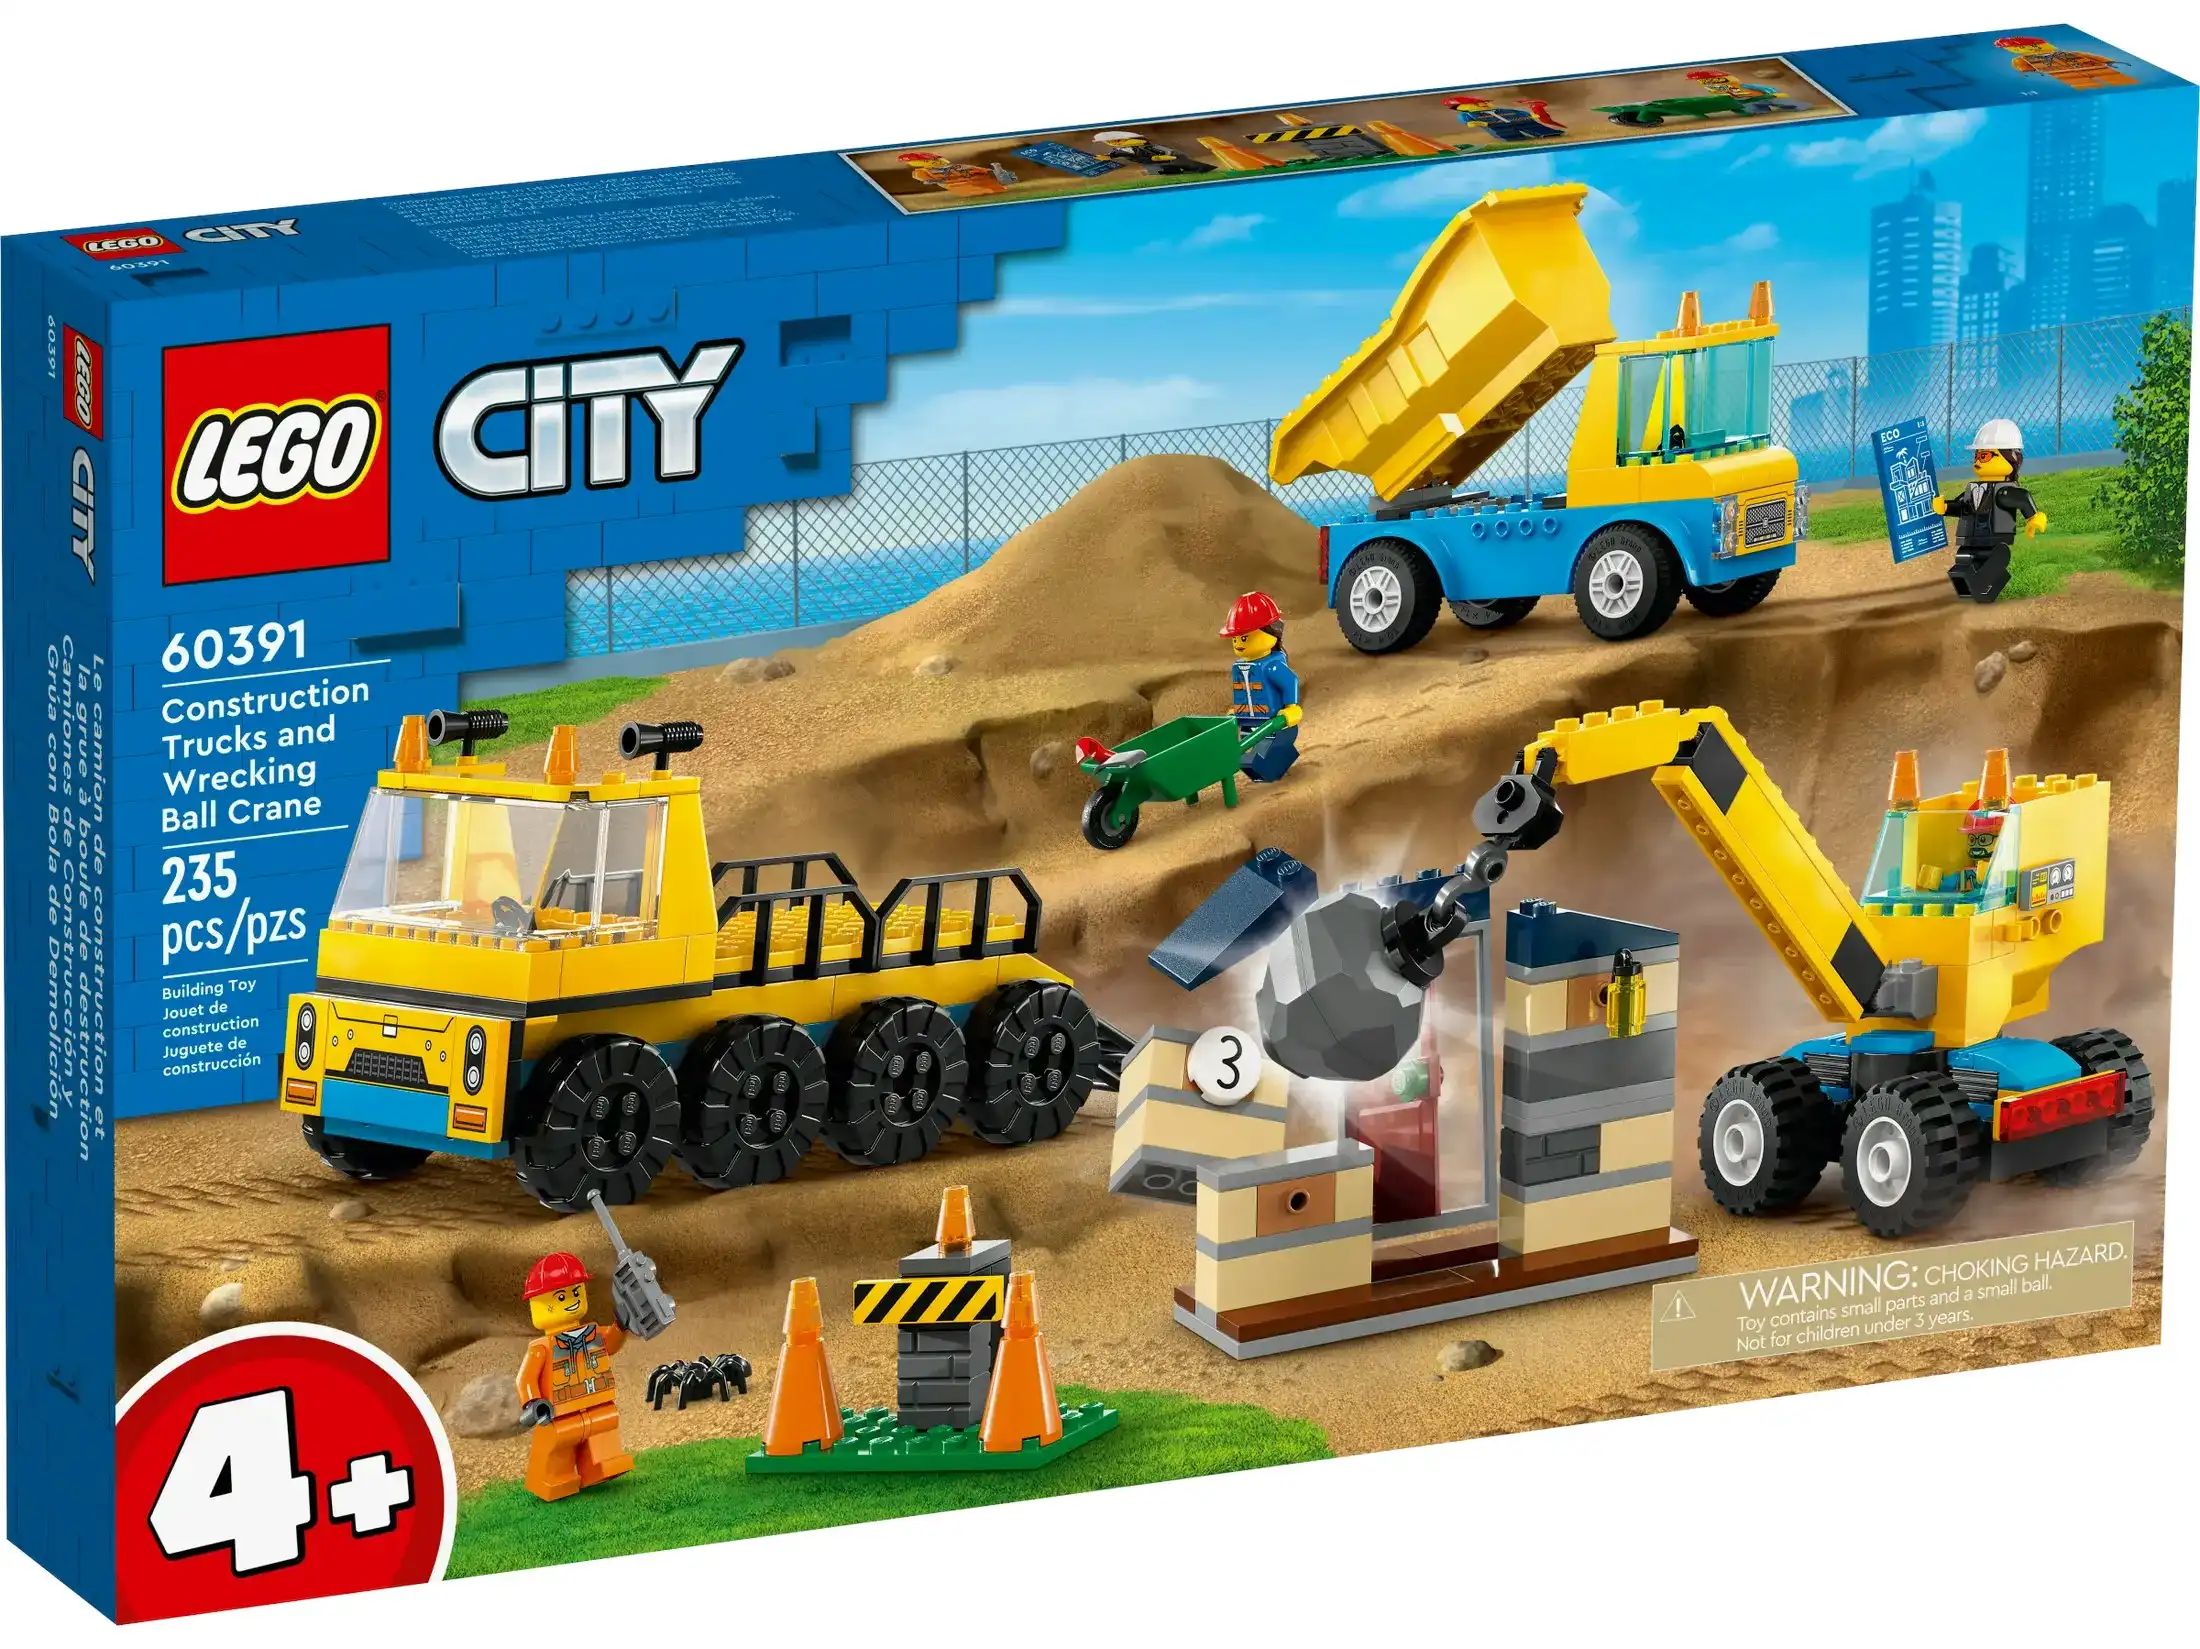 LEGO 60391 Construction Trucks and Wrecking Ball Crane - City 4+